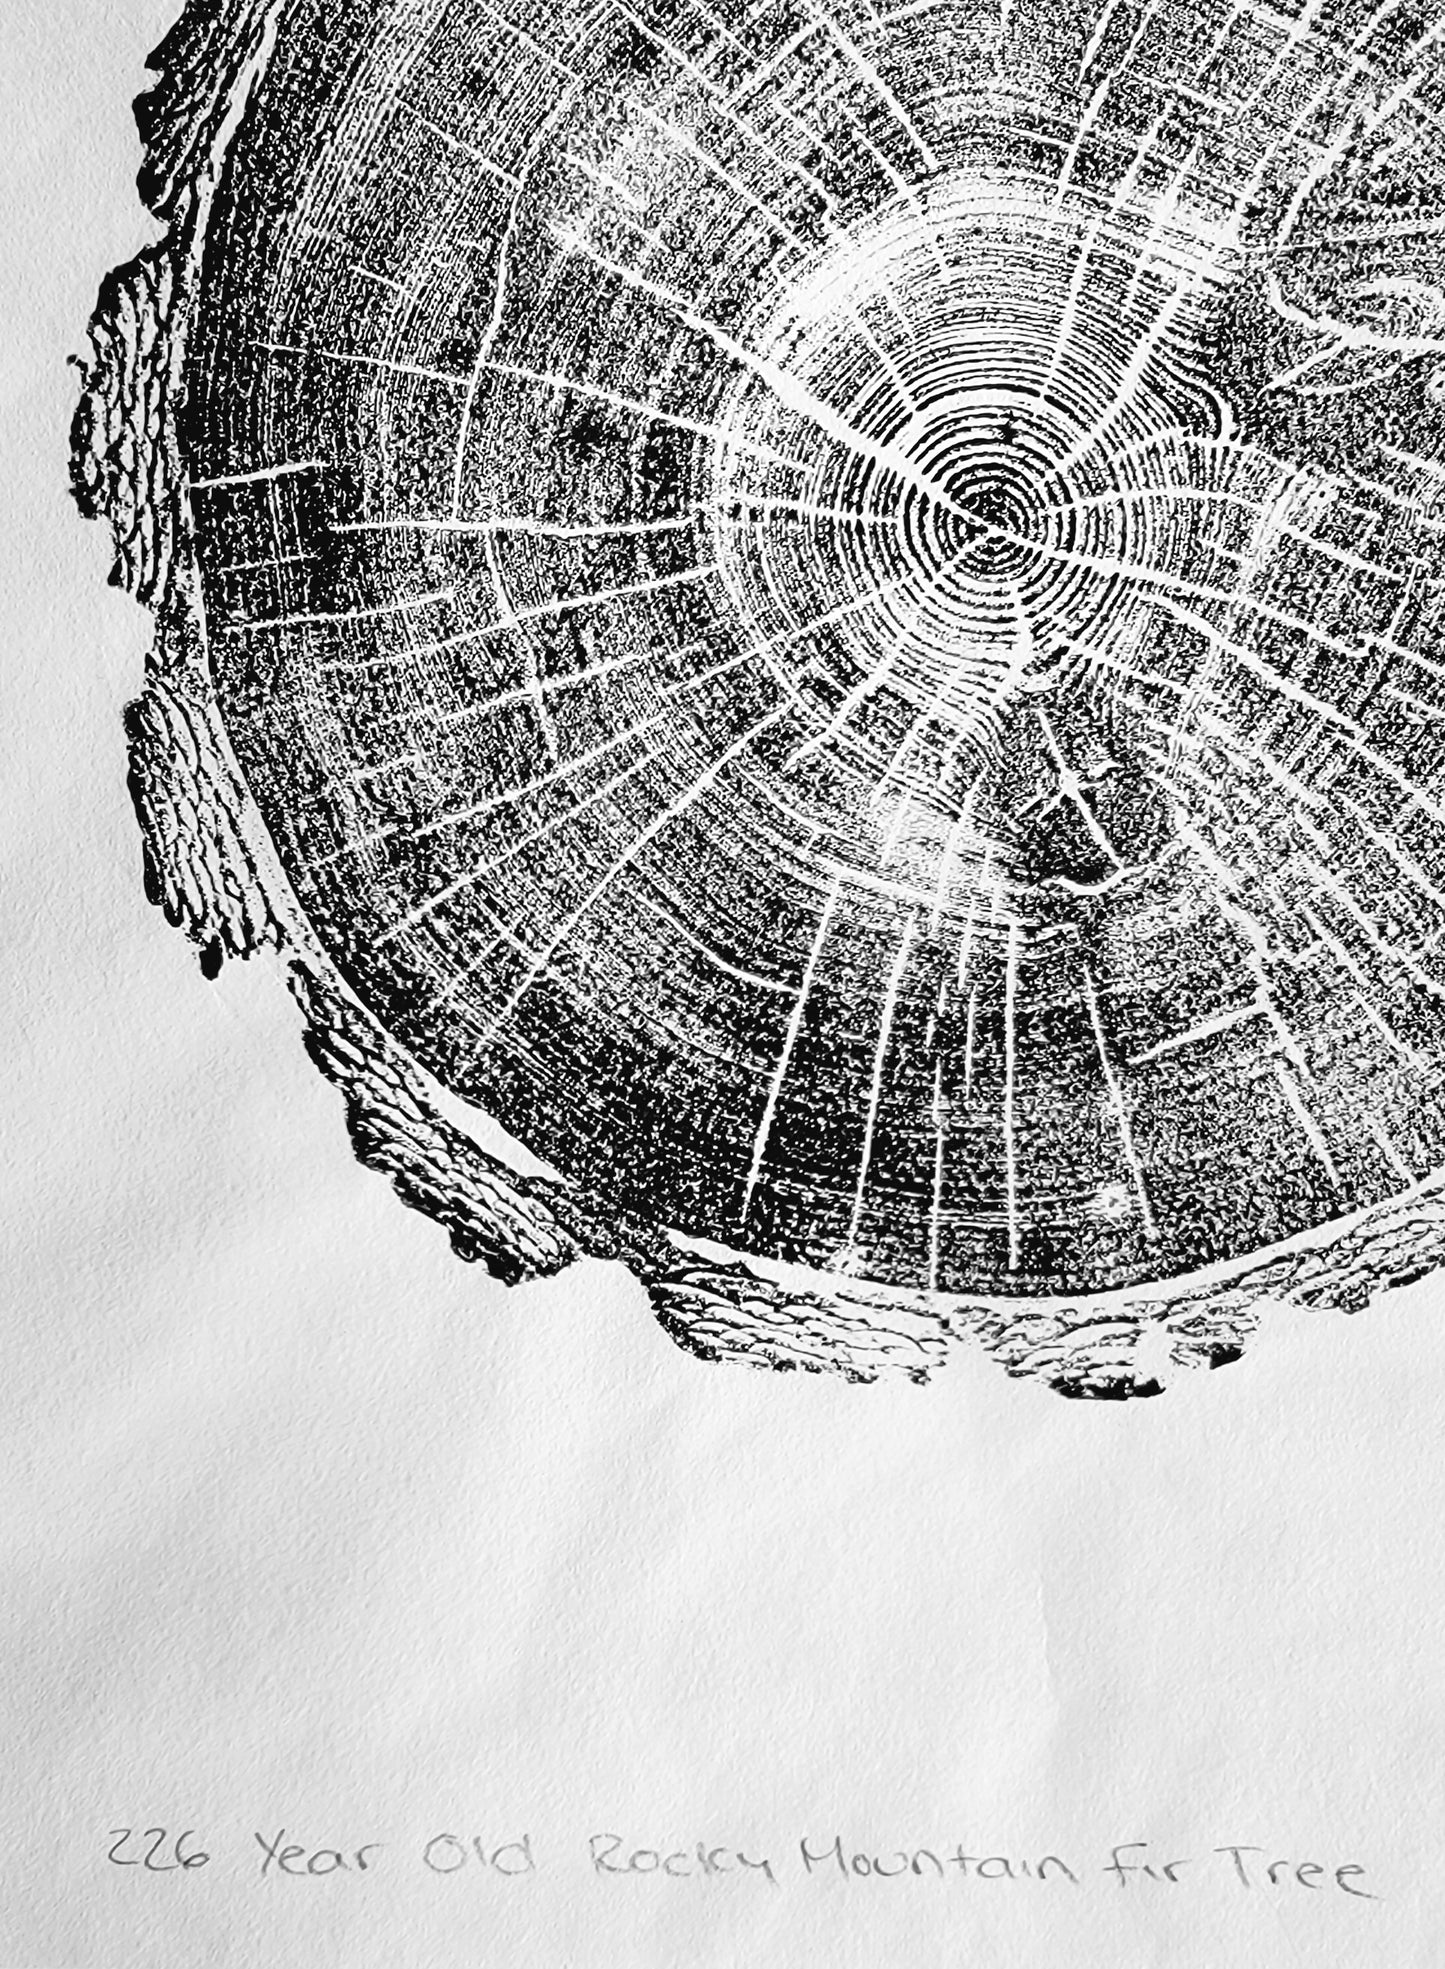 226 Year Old Rocky Mountain Fir Tree